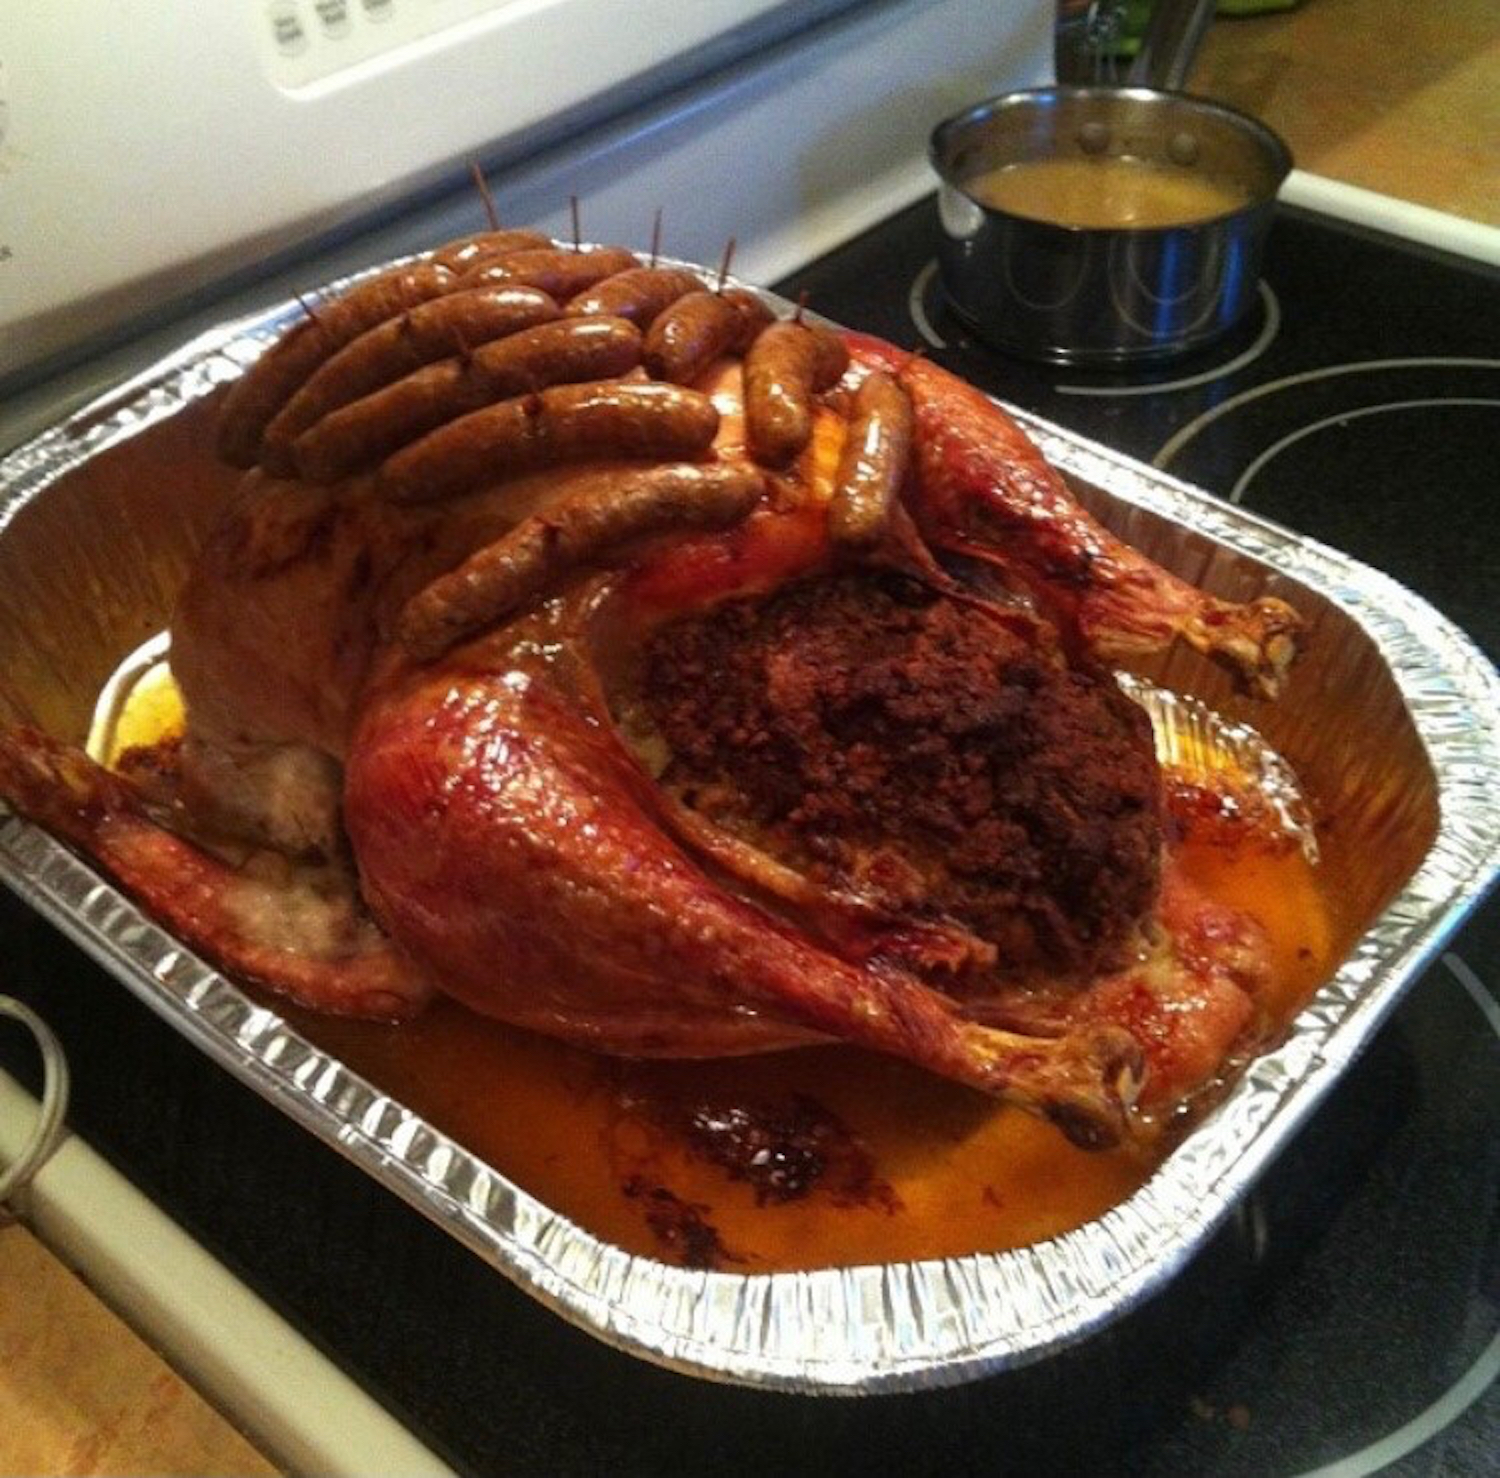 Sausage turkey. Photo courtesy of Donna Sharp Blaney.